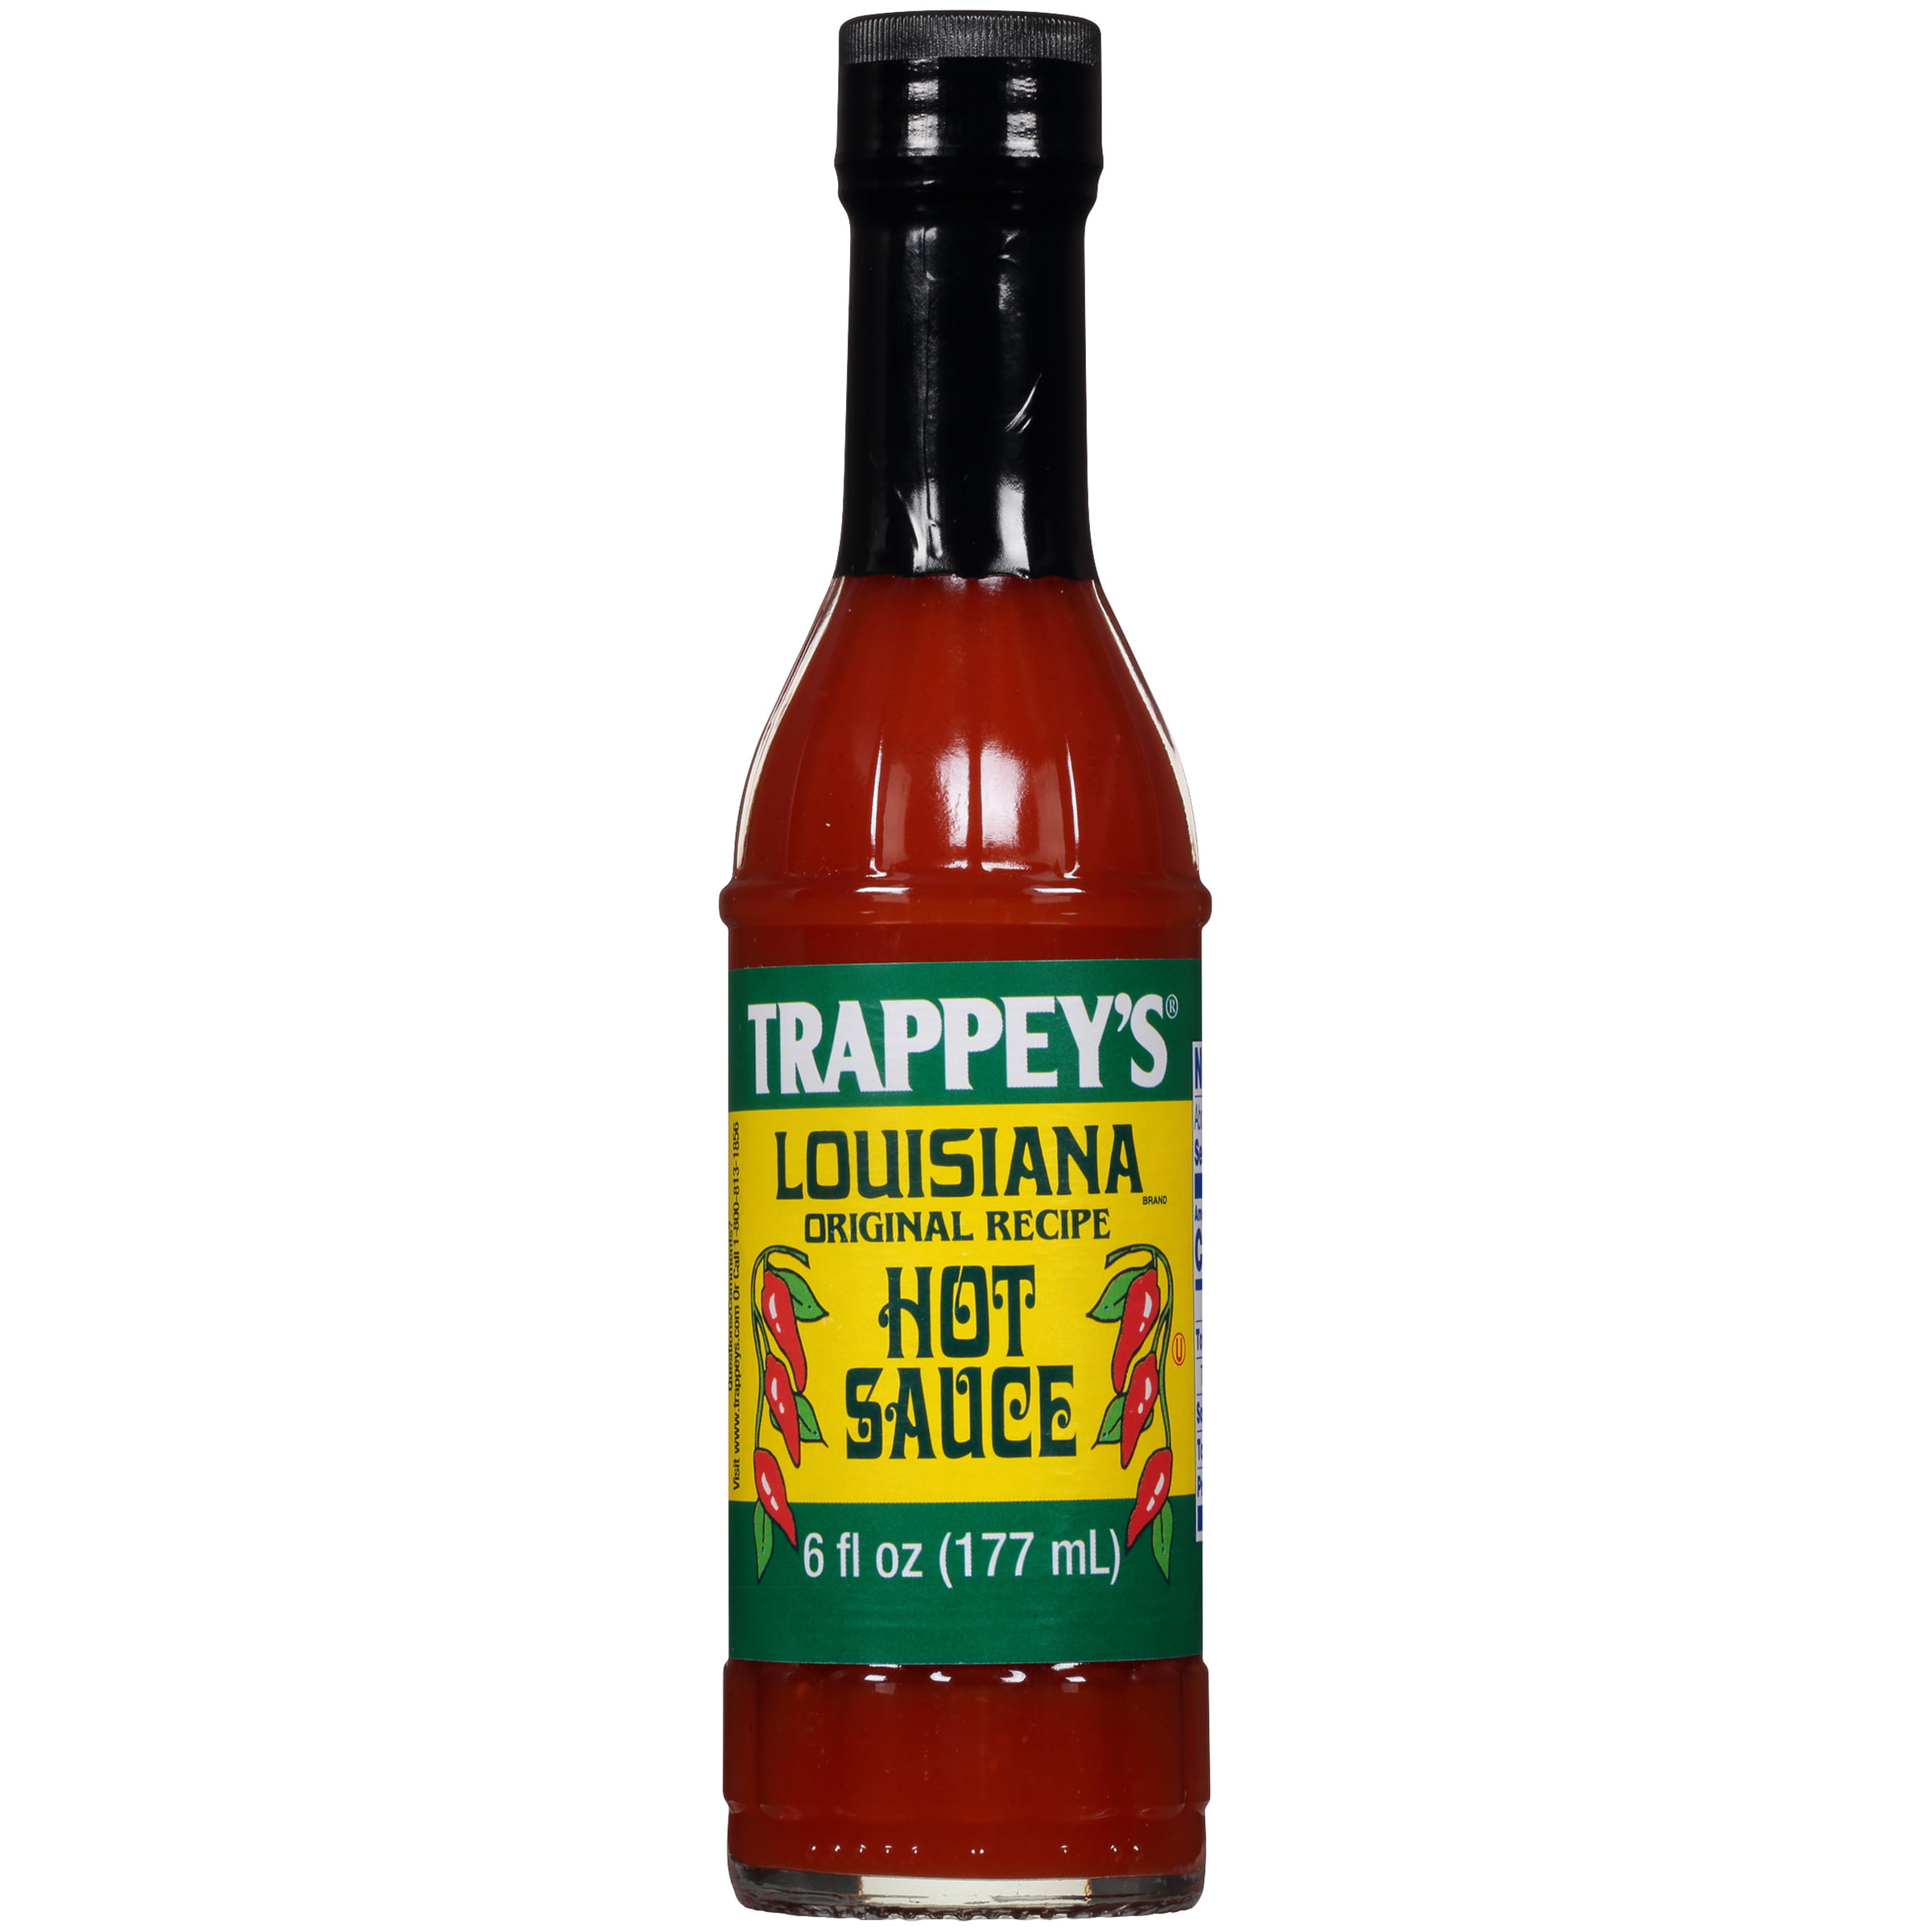 Trappey's Louisiana Hot Sauce, Original Recipe - 6 fl oz